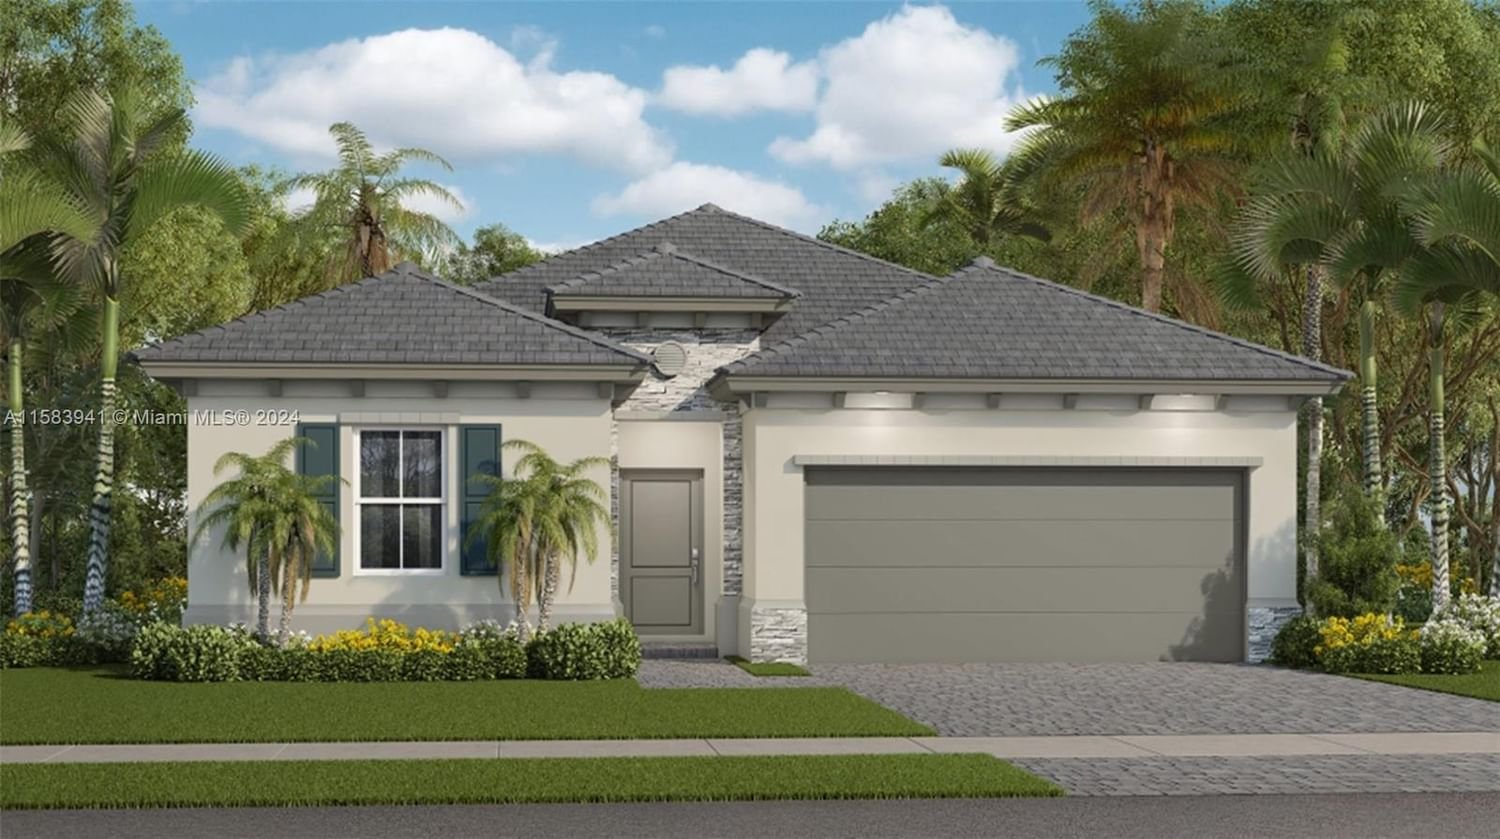 Real estate property located at 13617 186 LN, Miami-Dade County, Beacon at Galiano Pointe, Miami, FL